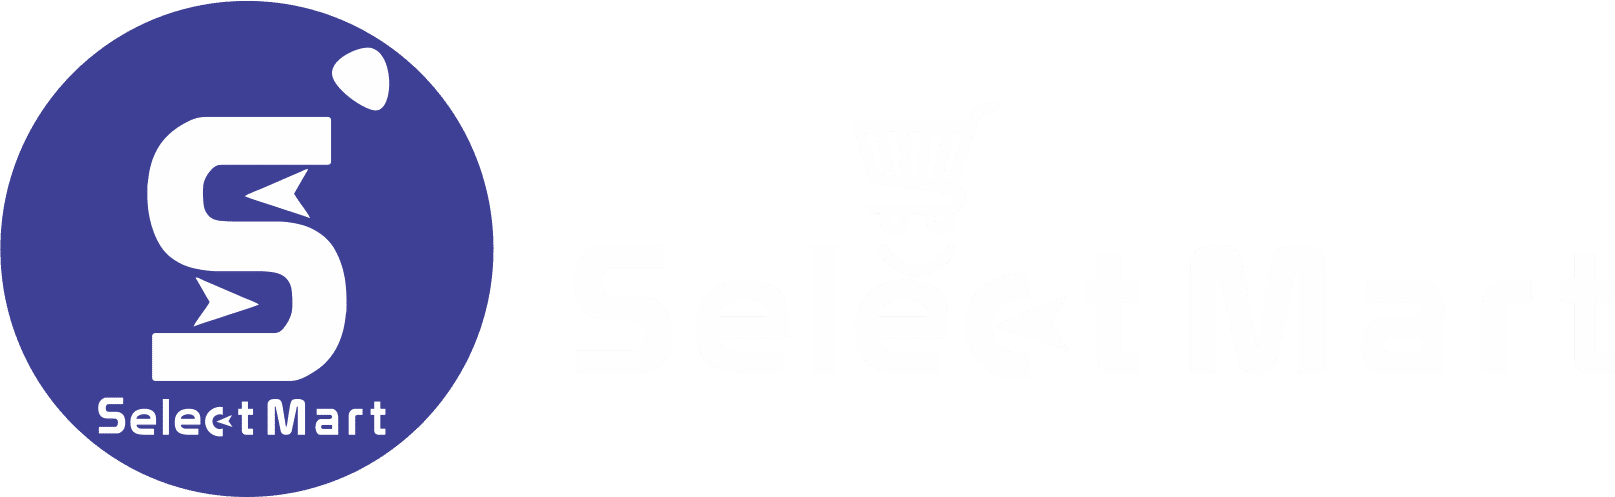 Select Mart India